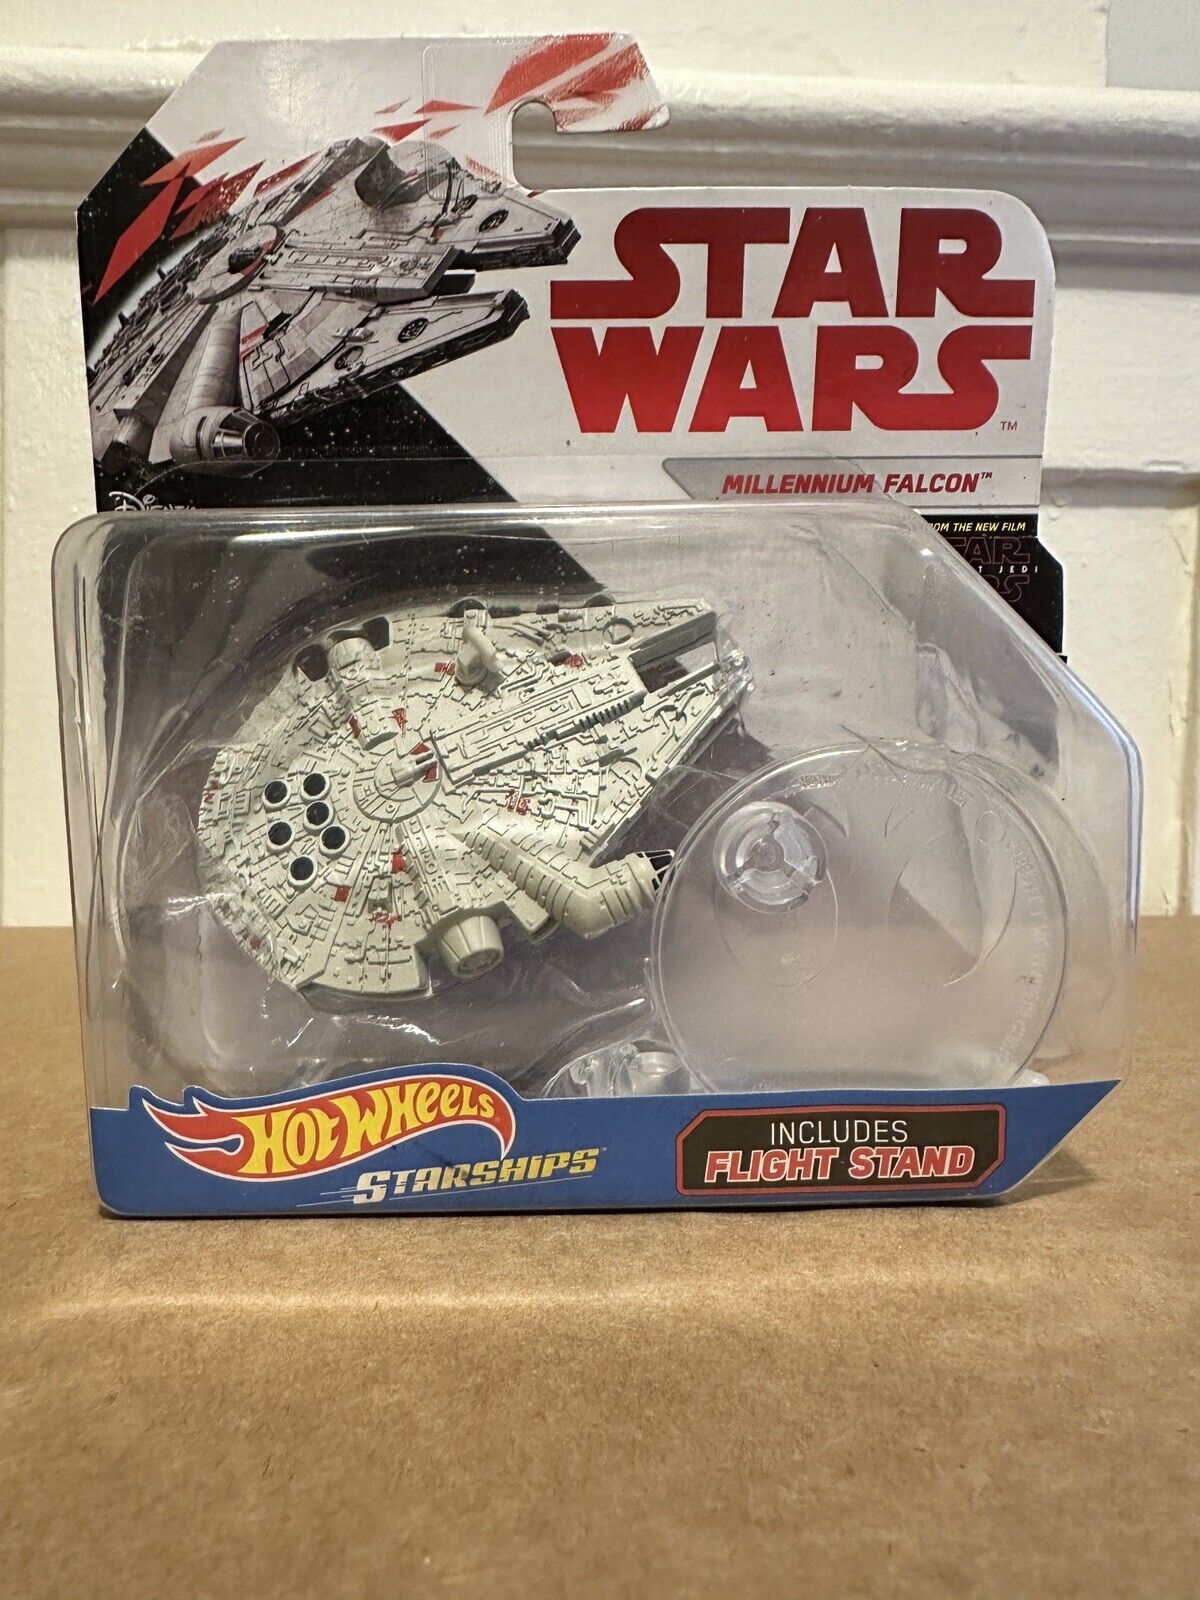 Star Wars Hot Wheels Starships (2016) The Last Jedi Millennium Falcon Toy